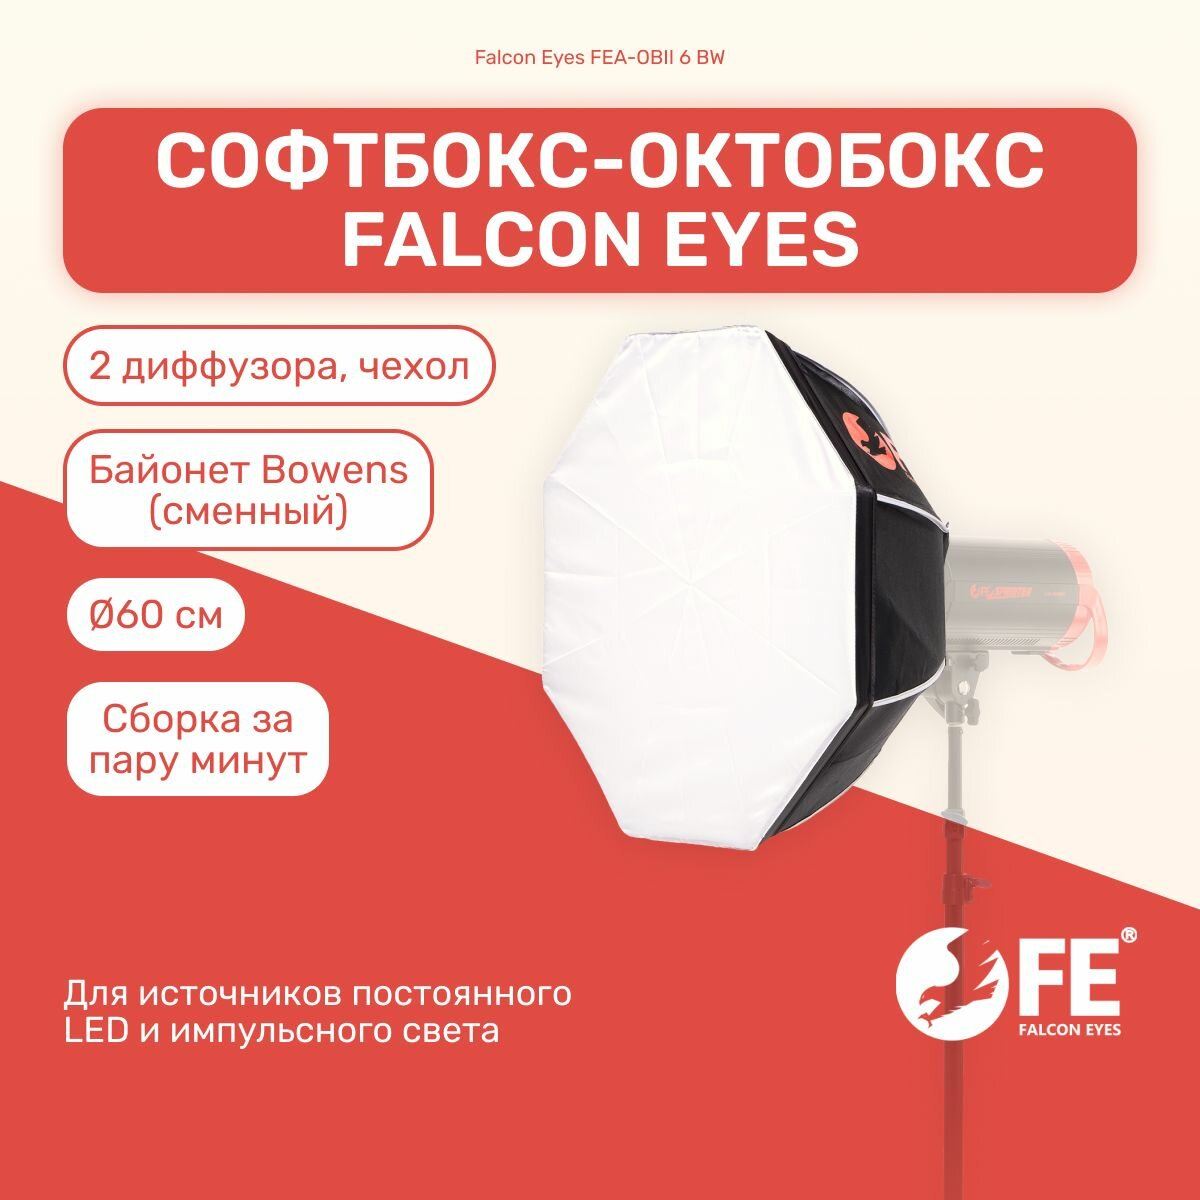 Софтбокс октобокс Falcon Eyes FEA-OBII 6 BW 60 см для фото и видео съемок